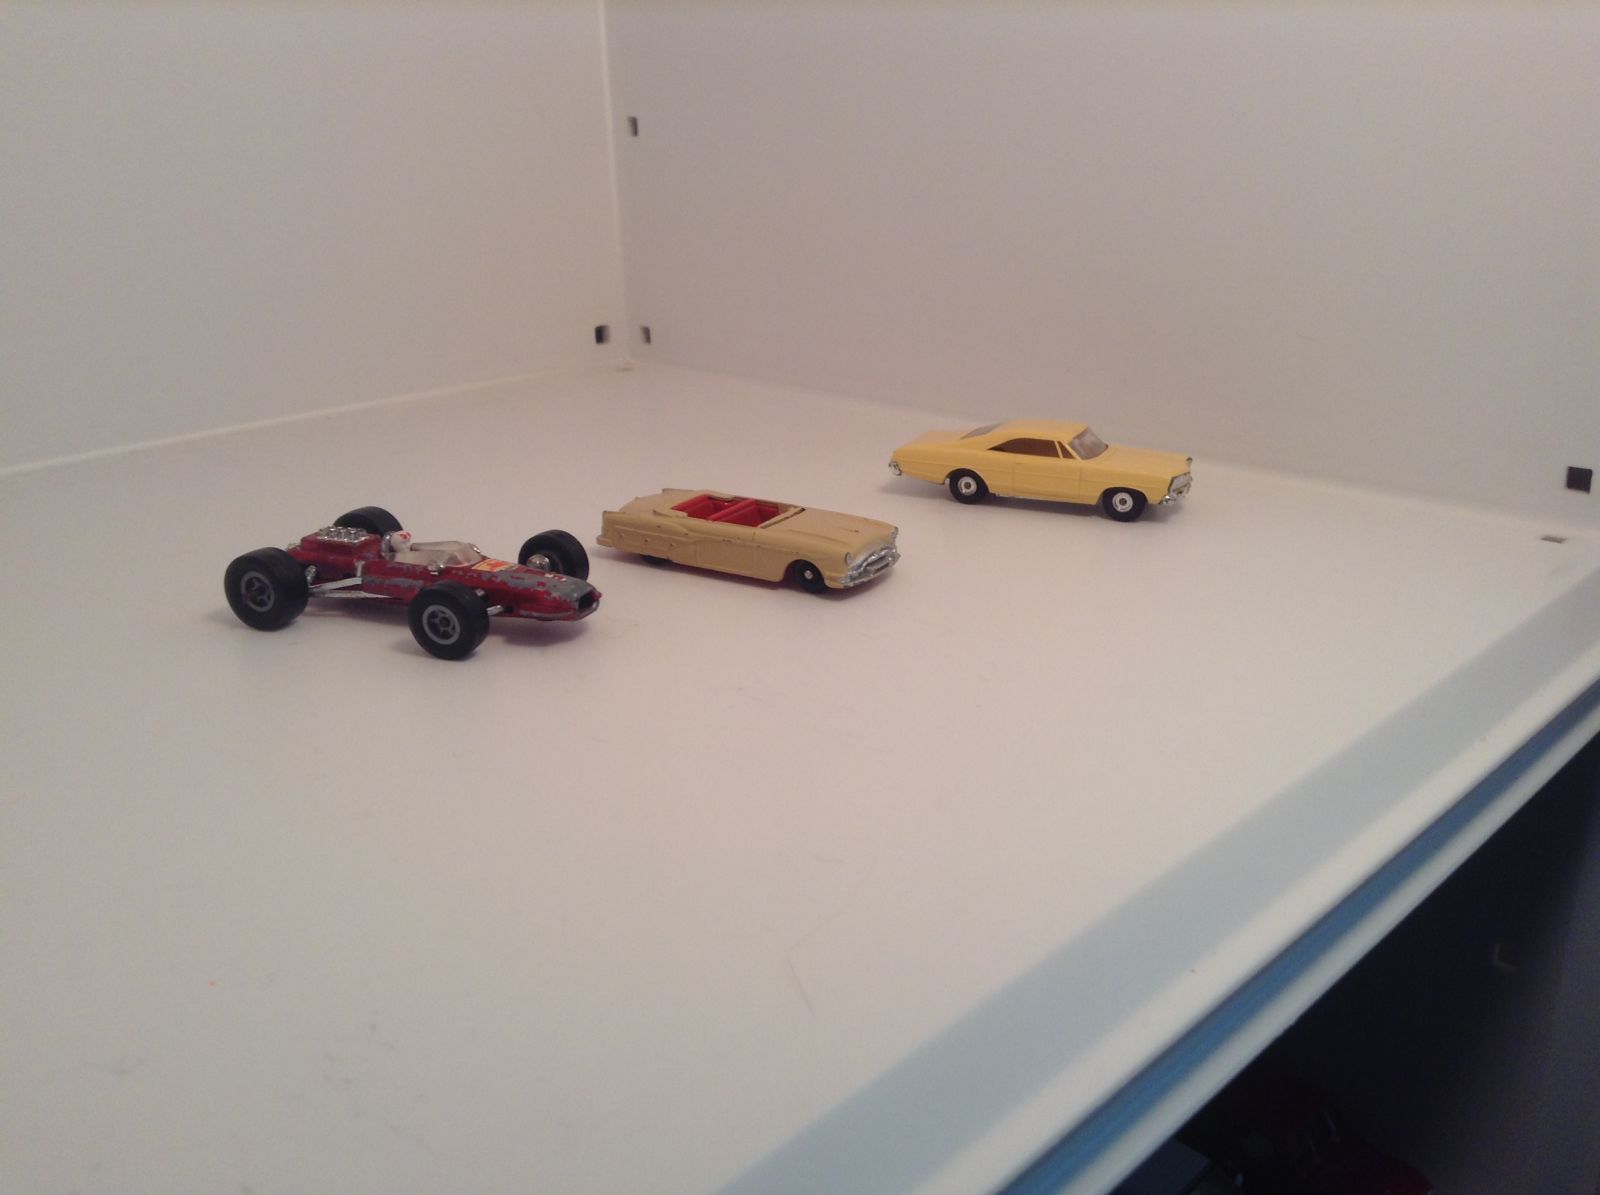 Majorette Ferrari, Budgie Packard (missing windscreen), and Cigar Box Ford Galaxie (needs screws)